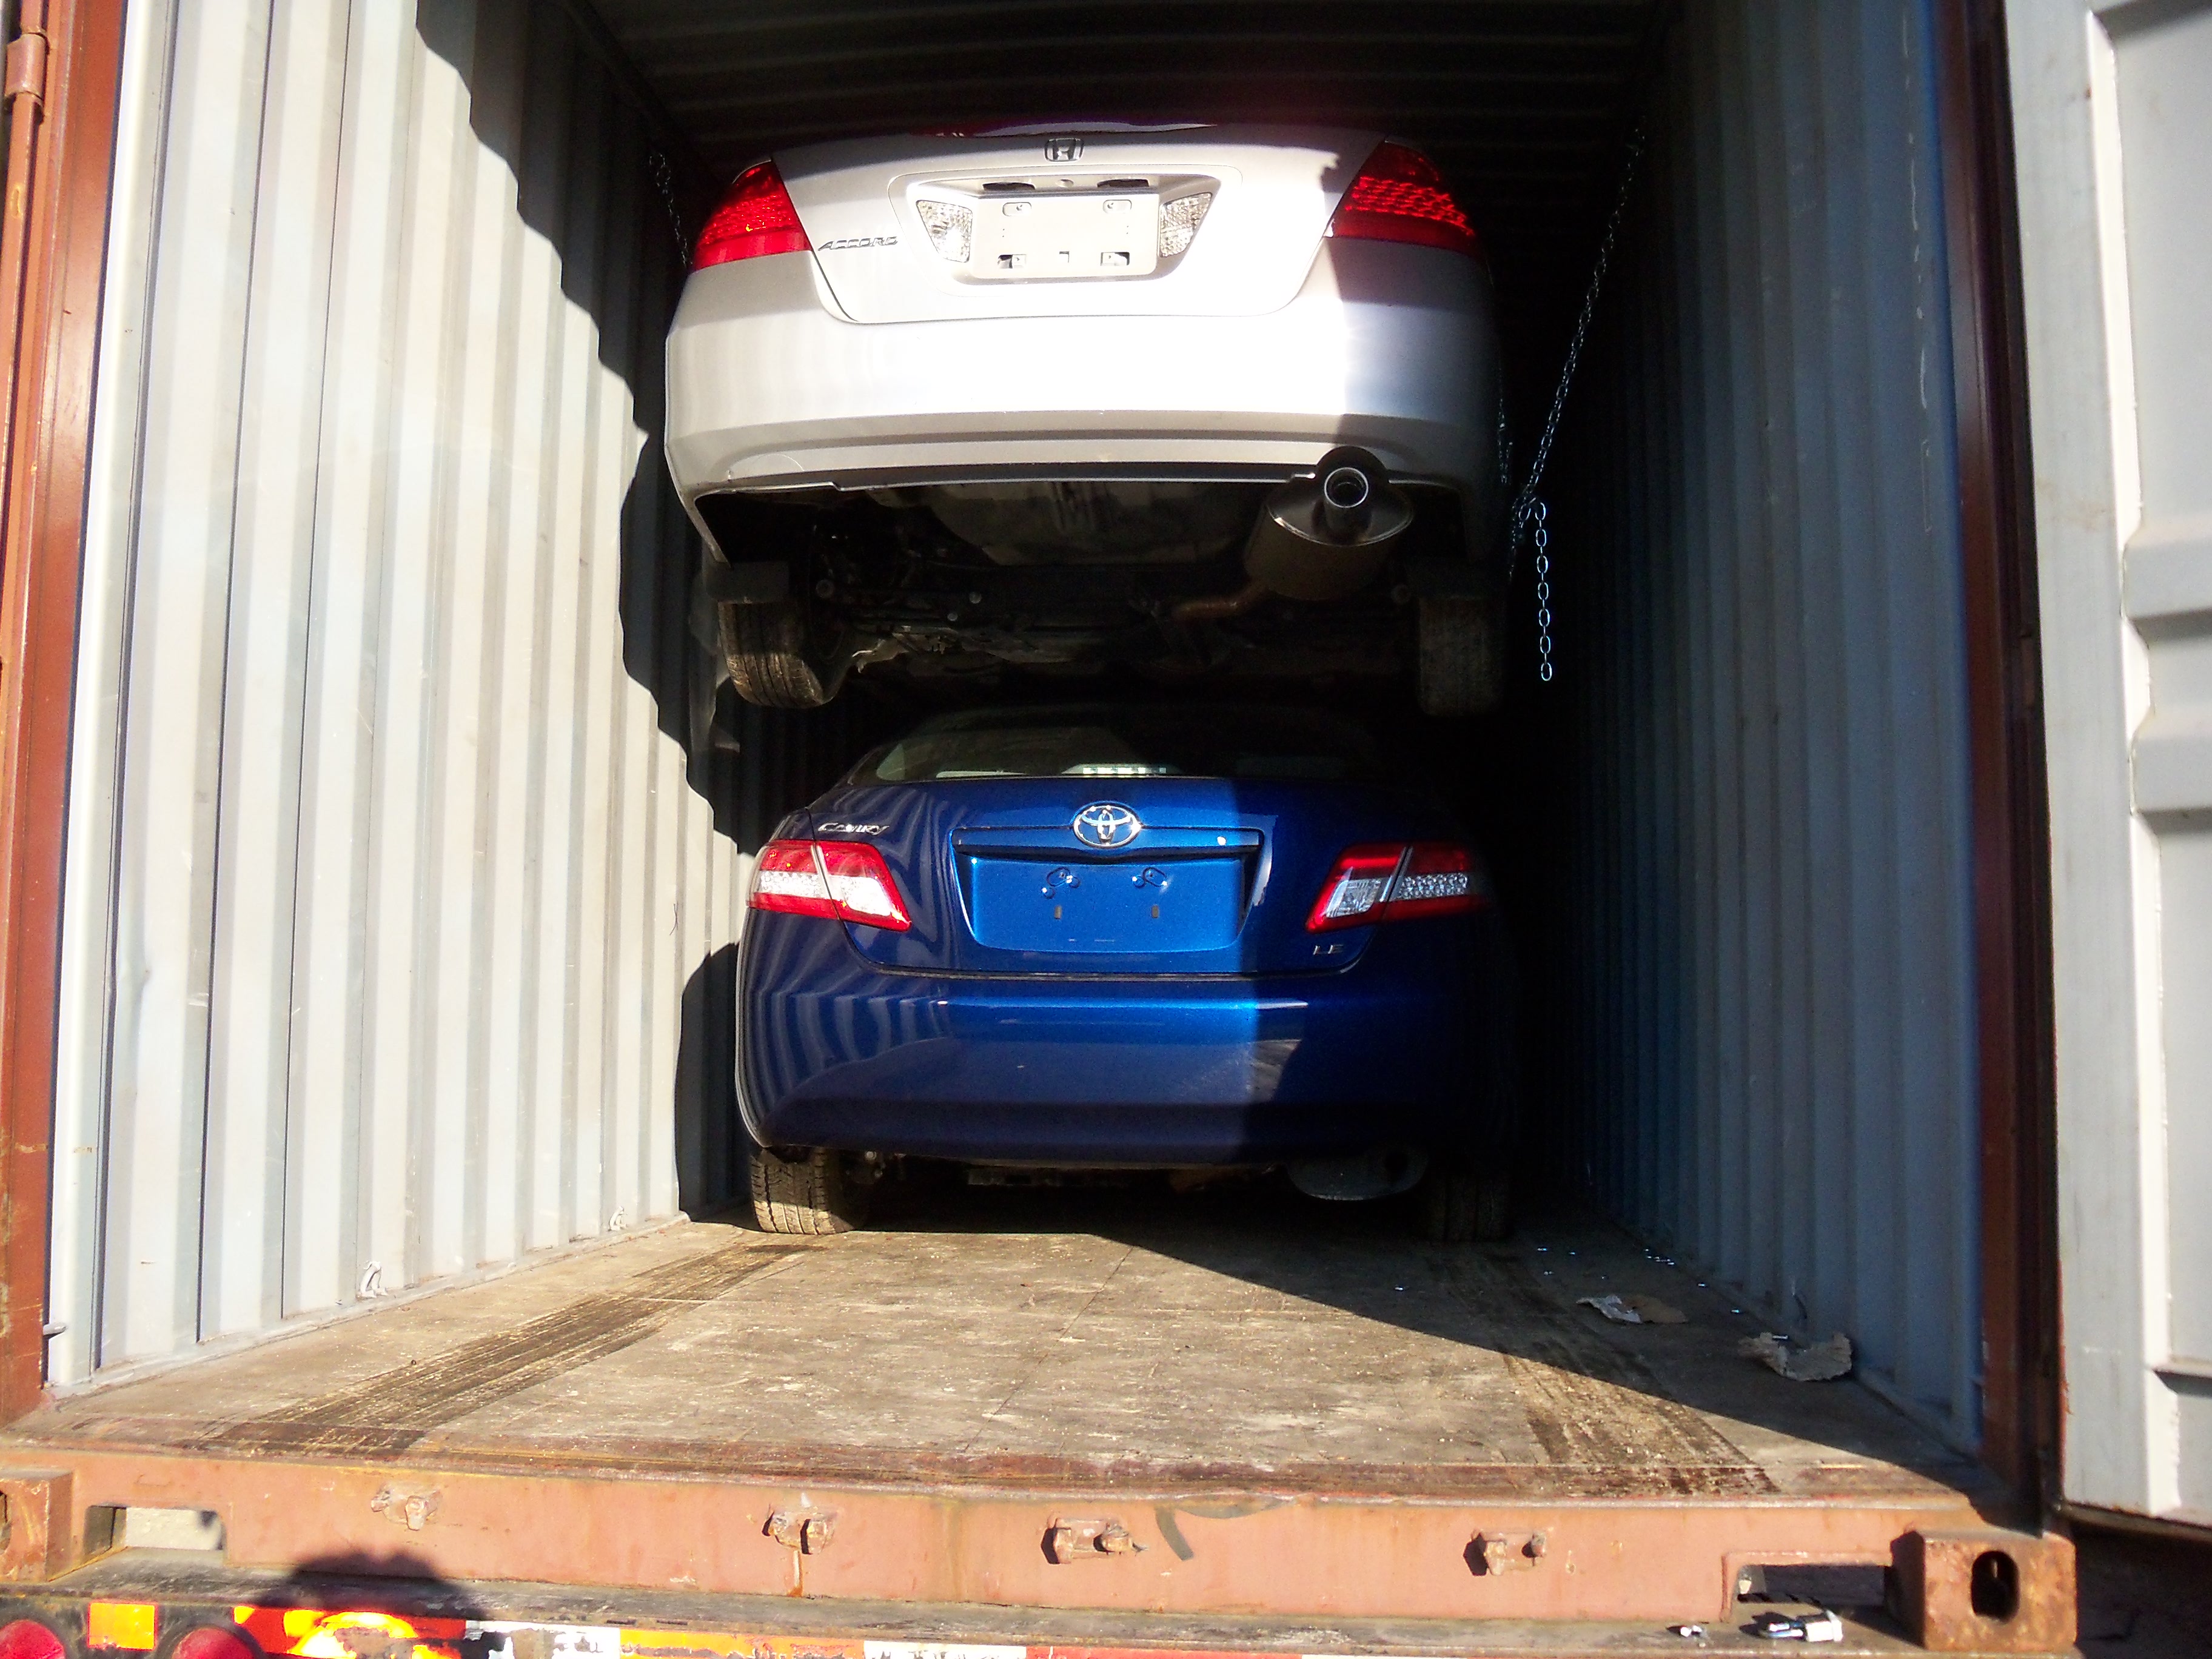 Car loading. БМВ В контейнере. Авто в контейнере. Синяя БМВ В контейнере.